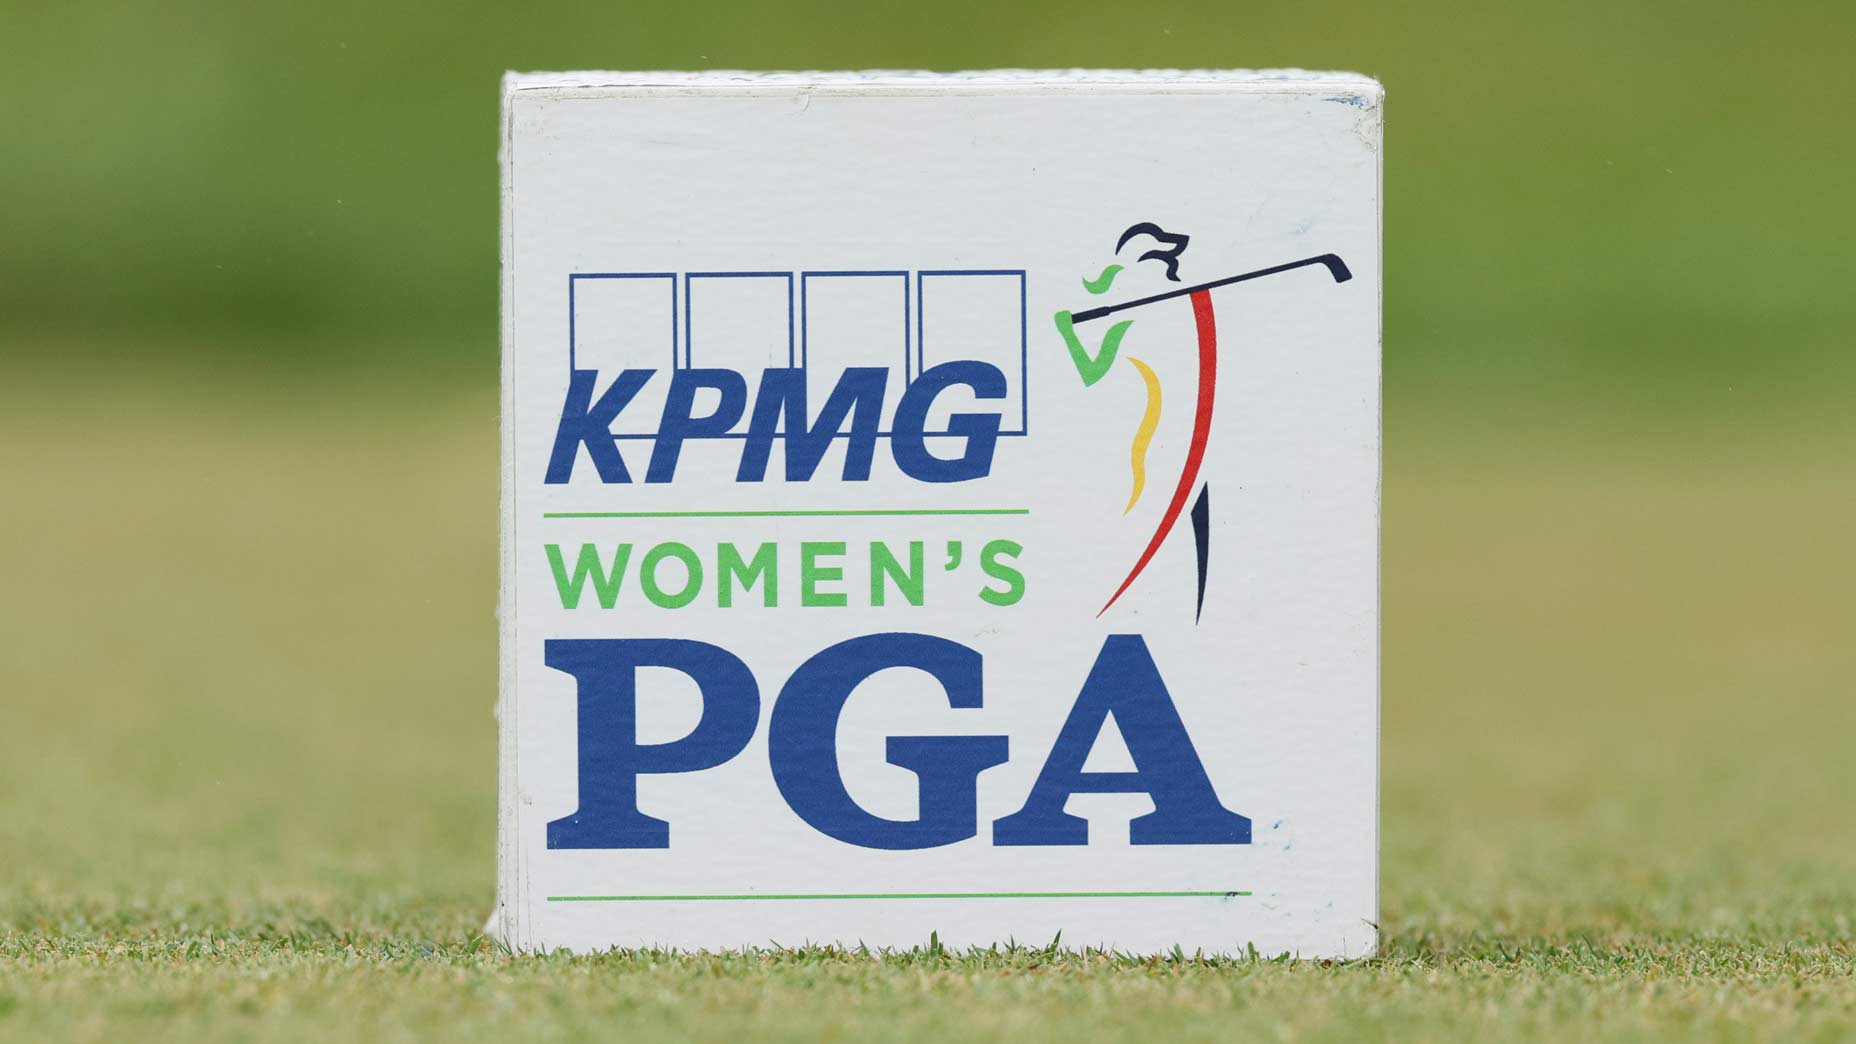 A KPMG Women's PGA Championship tee marker seen on a golf course